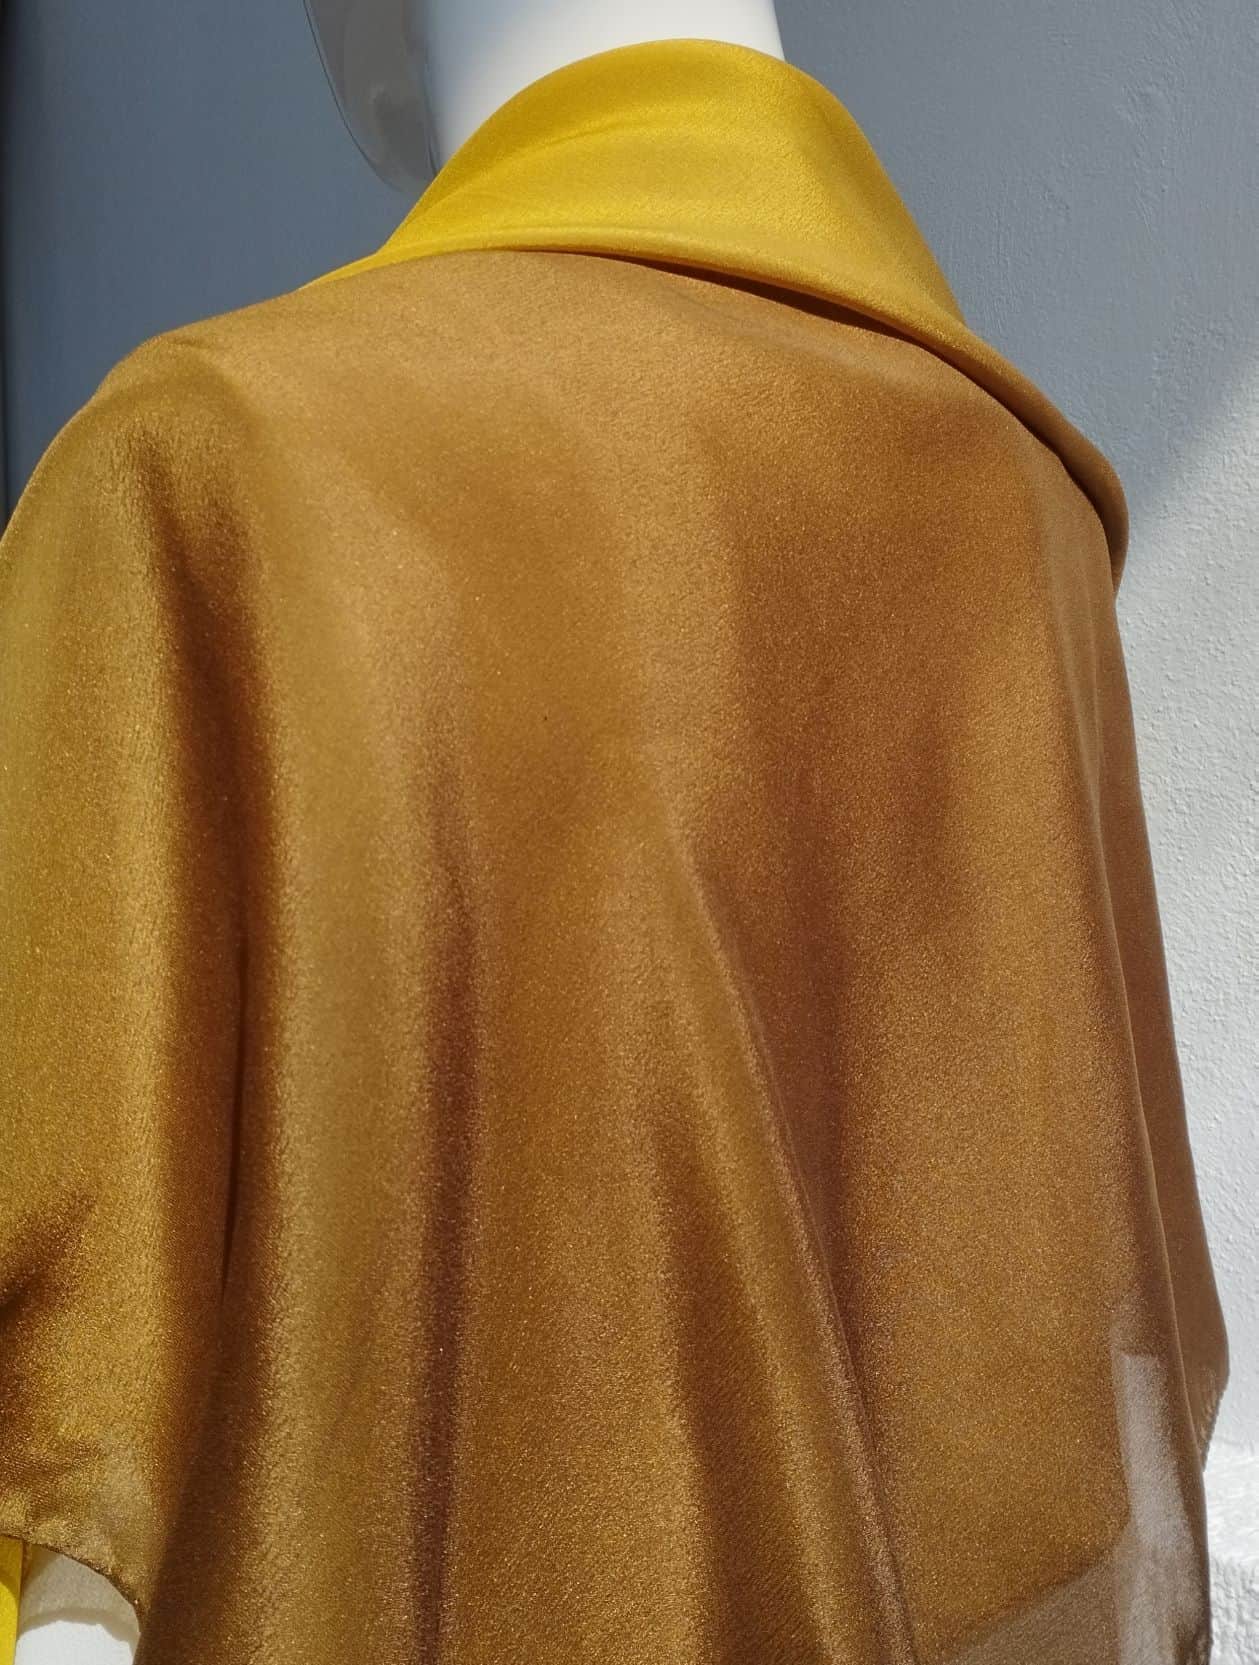 Silk degrade multicolored thin scarf Composition: Silk100% Colour: Brown-Bronze-Yellow Dimensions: 0,95* 0,95 Care: Dry Clean